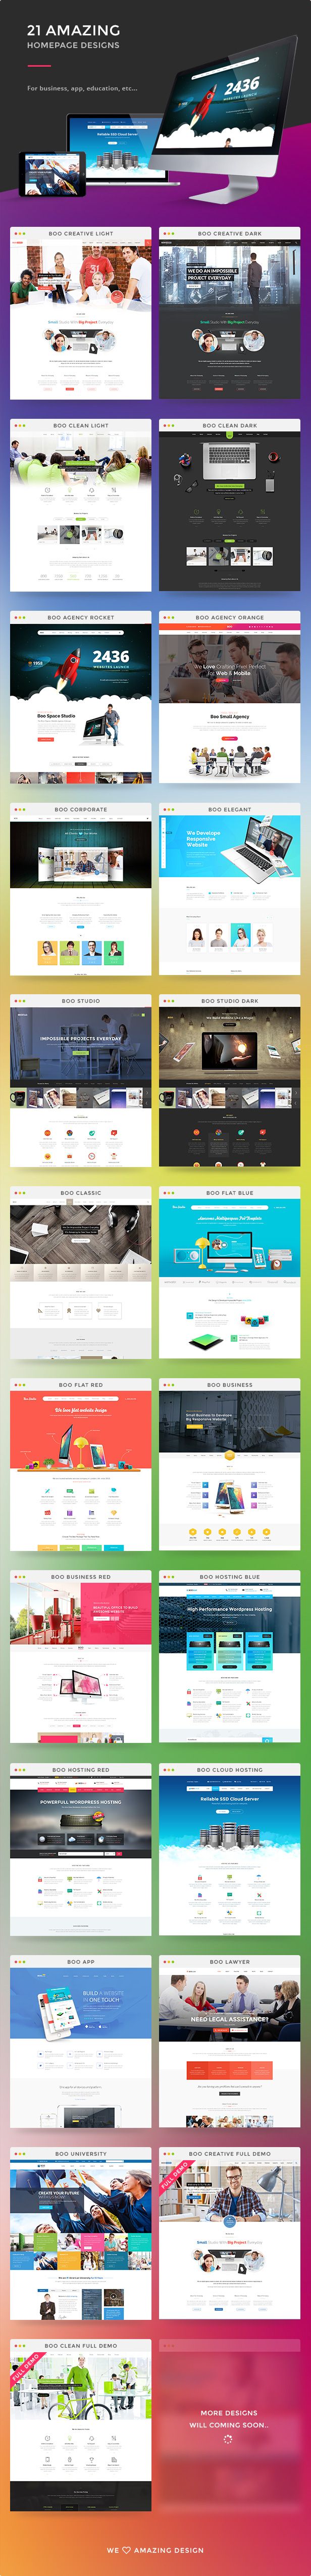 21 amazing homepage designs